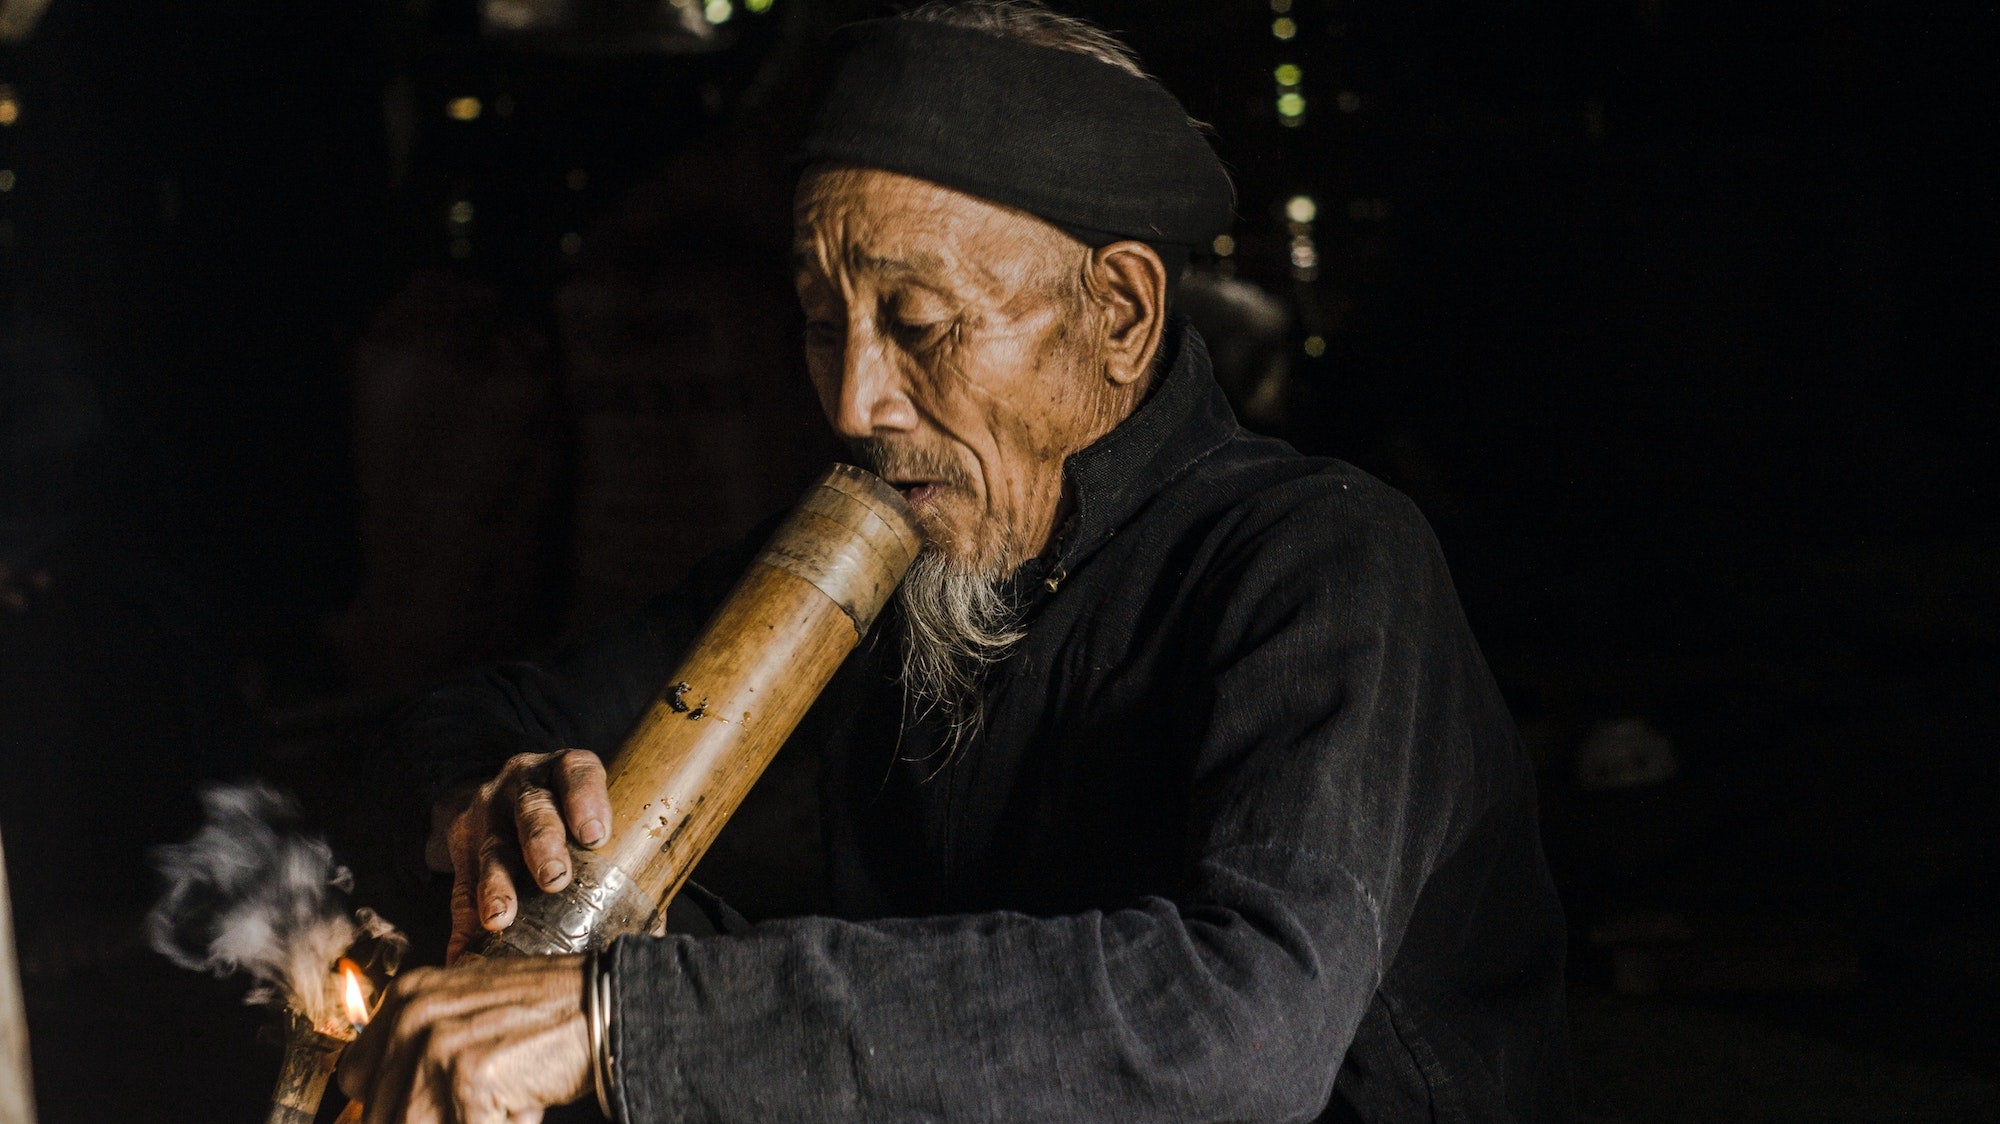 Man smoking bamboo bong - Shell Shock 